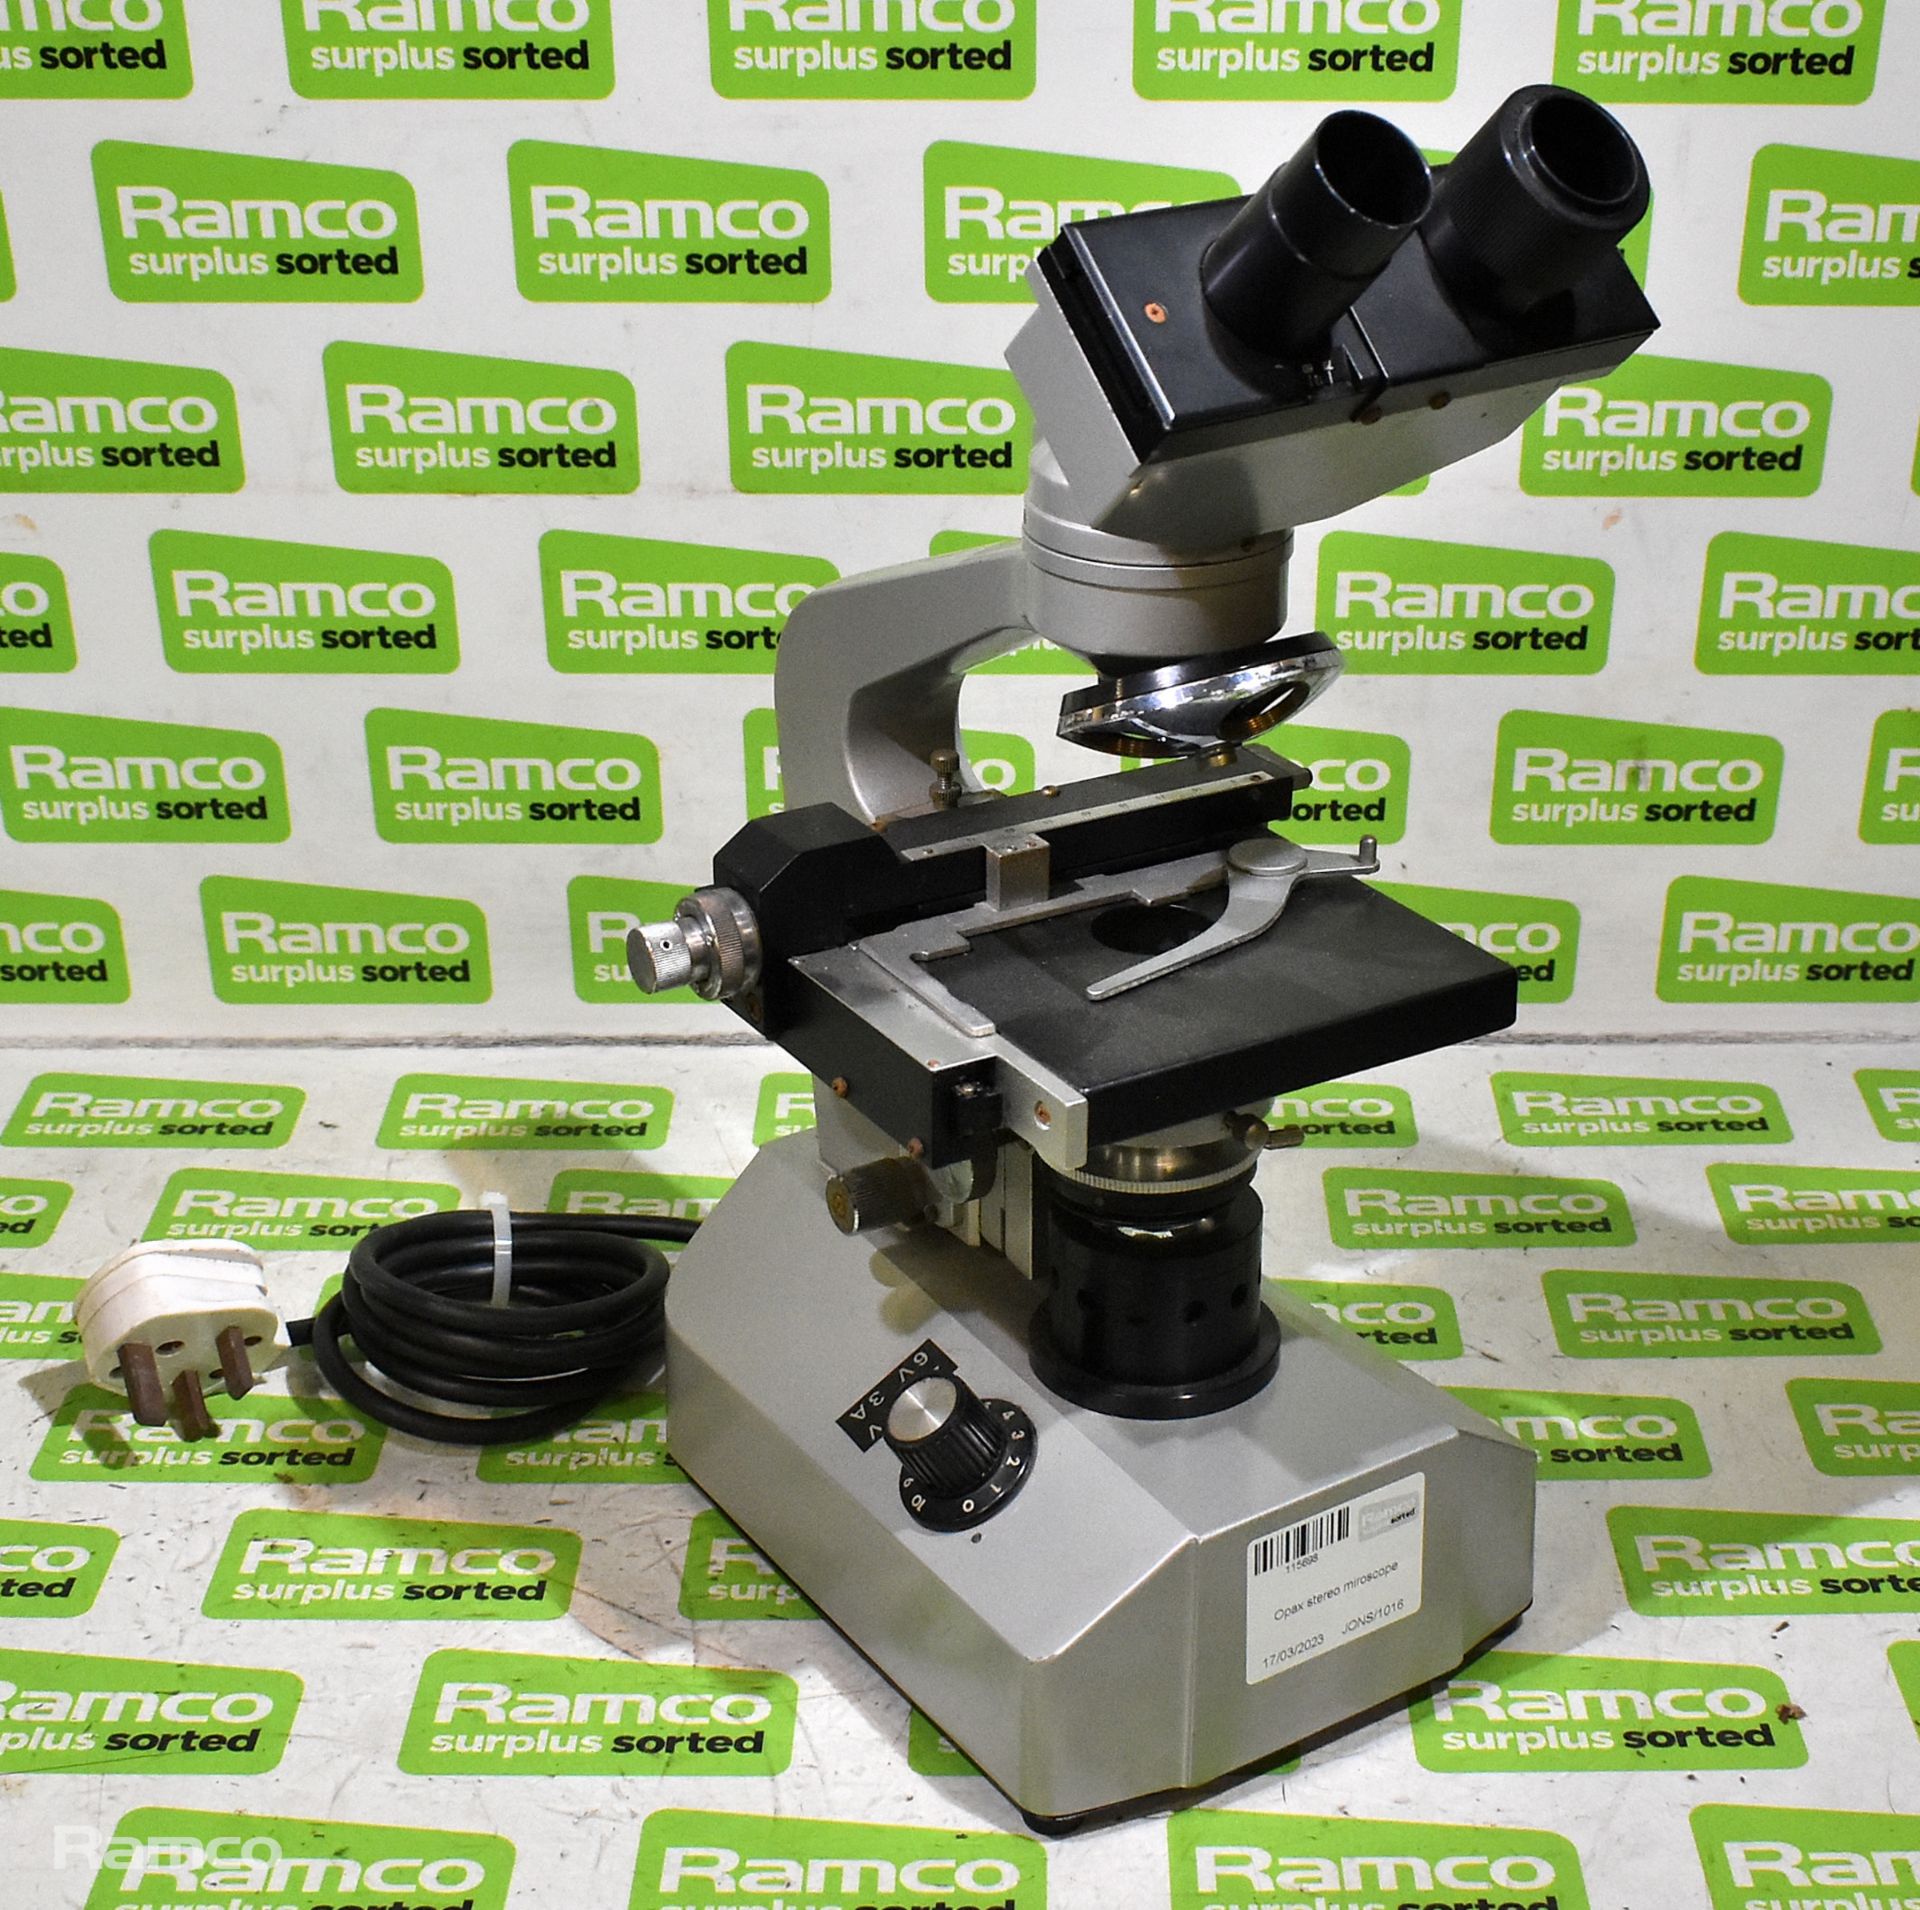 Opax stereomicroscope